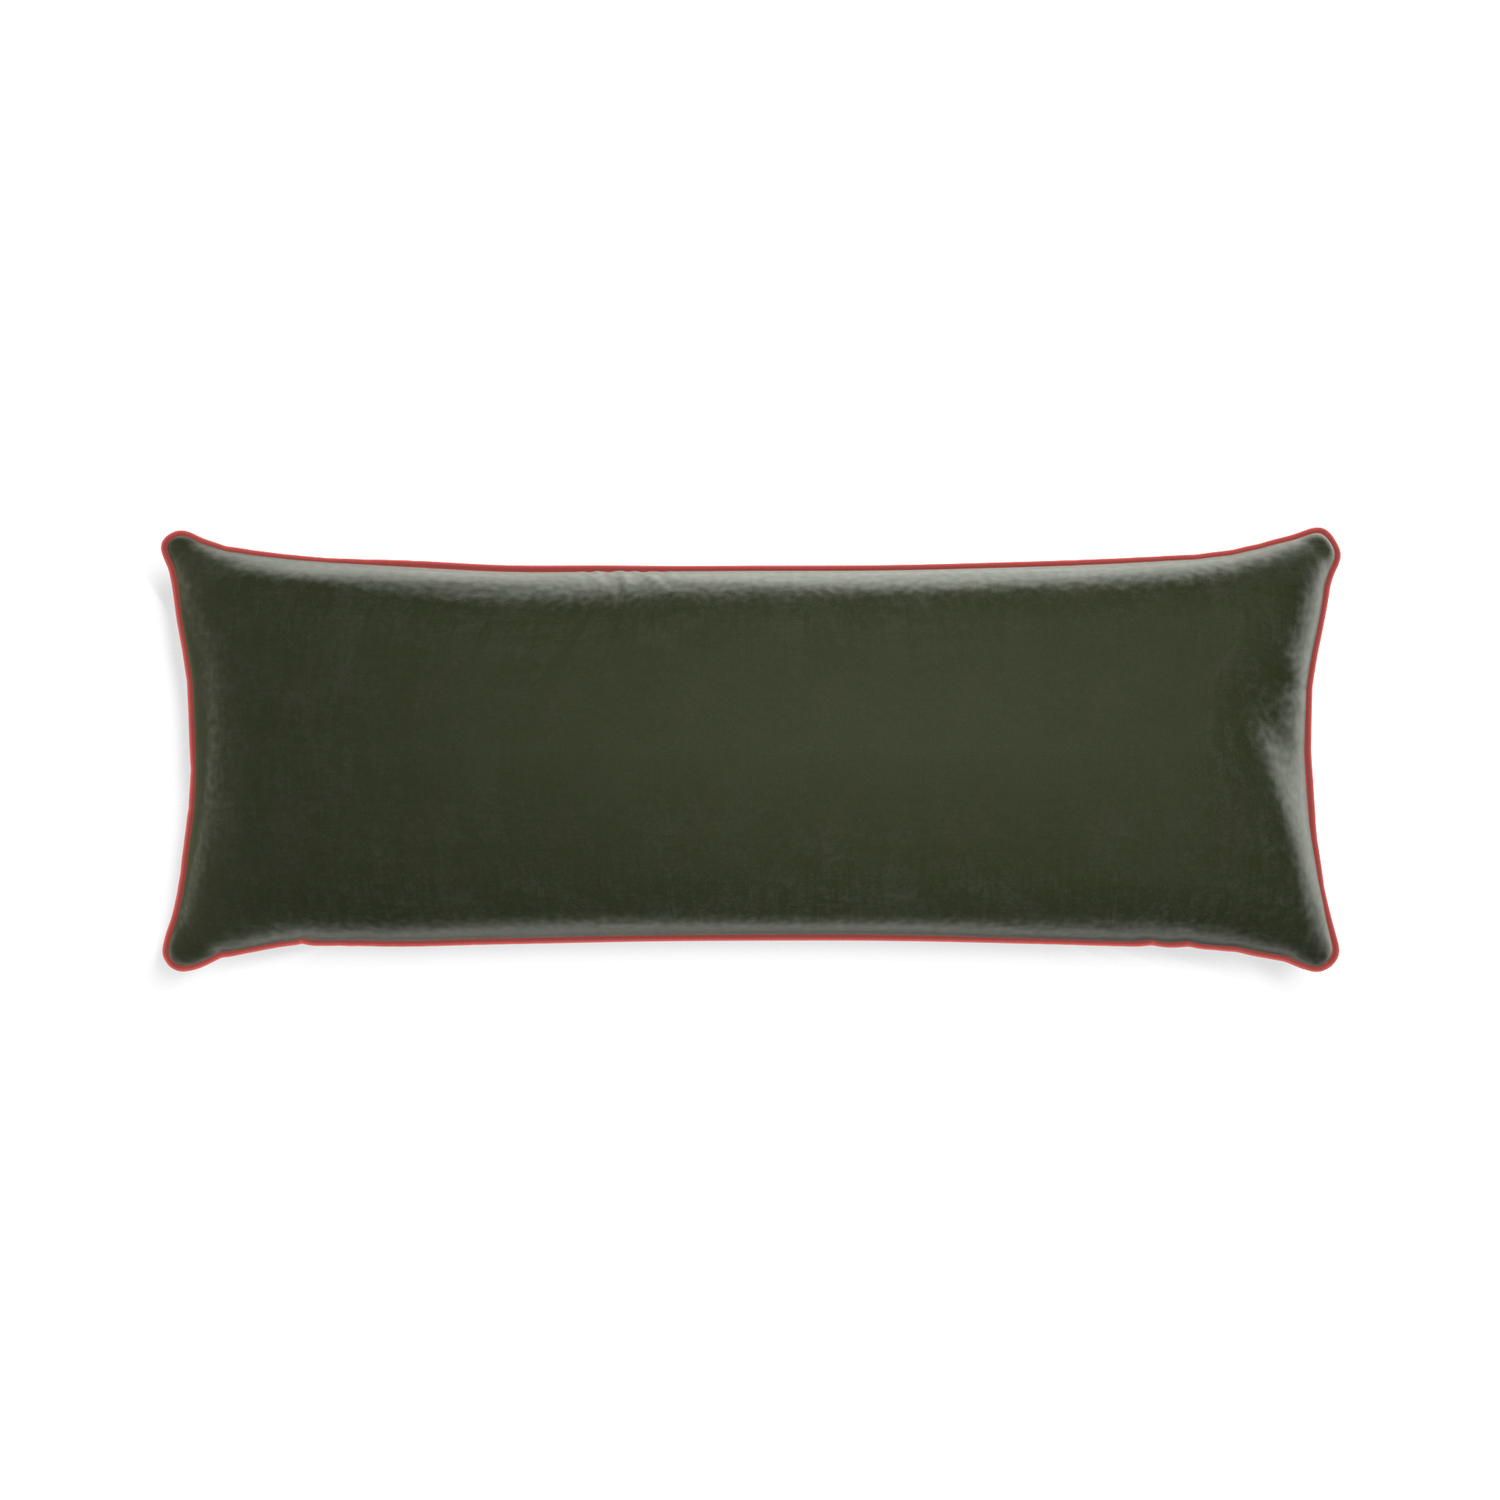 Xl-lumbar fern velvet custom pillow with c piping on white background